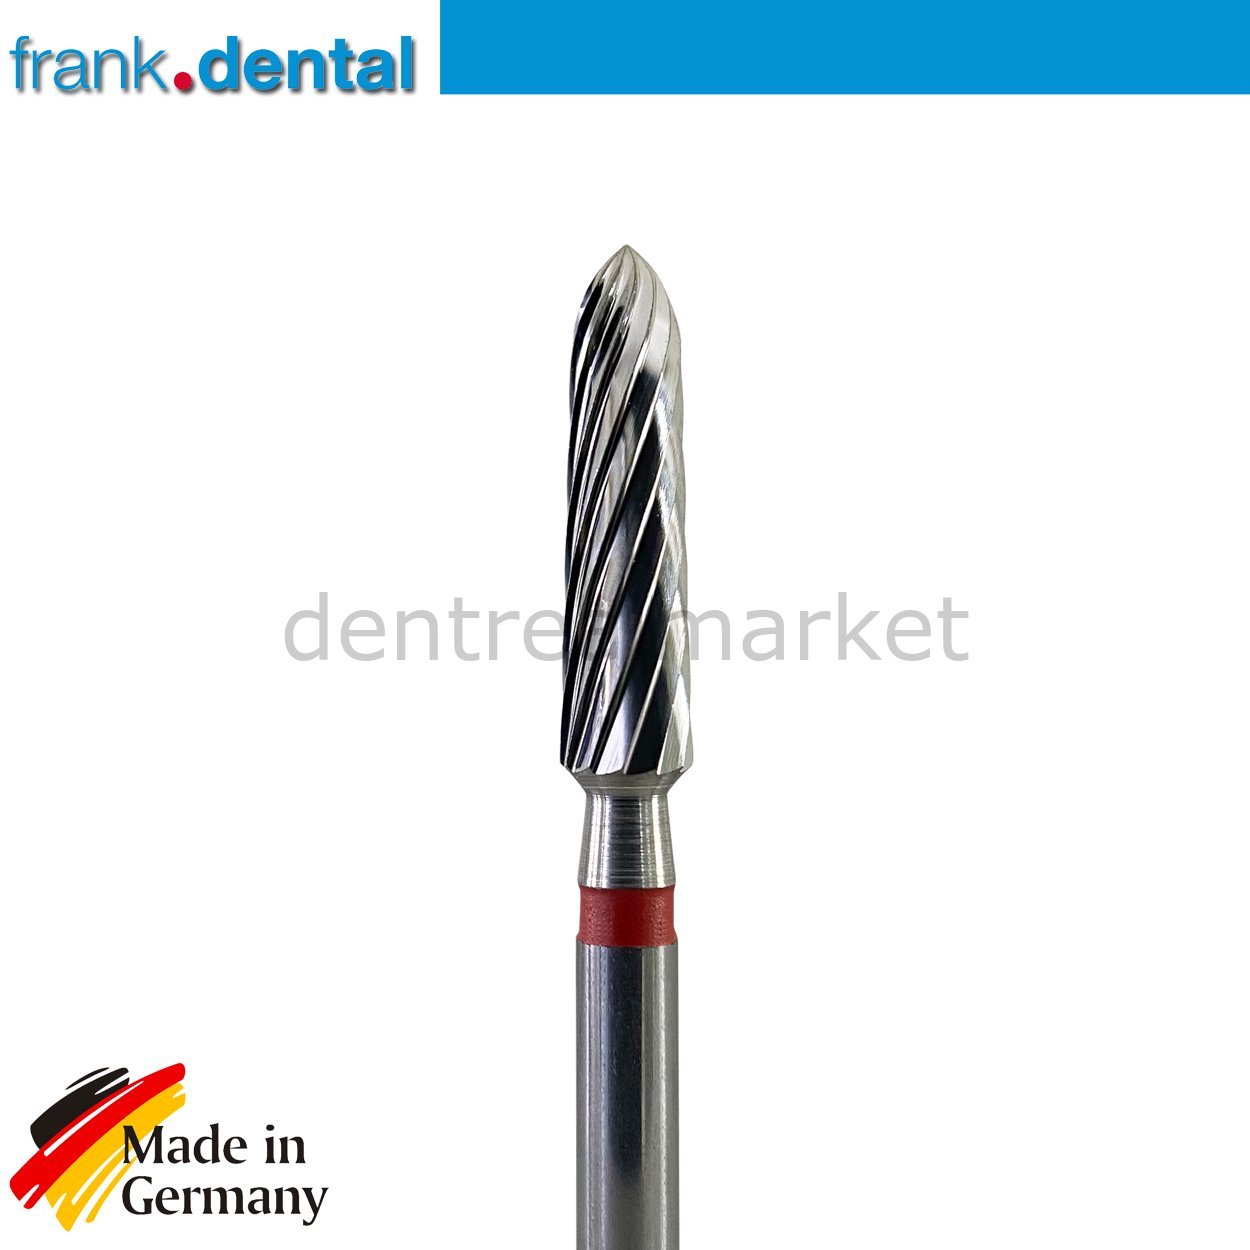 DentrealStore - Frank Dental Orthodontic Adhesive Remover & Debonding Bur - 283K -For Air Turbine